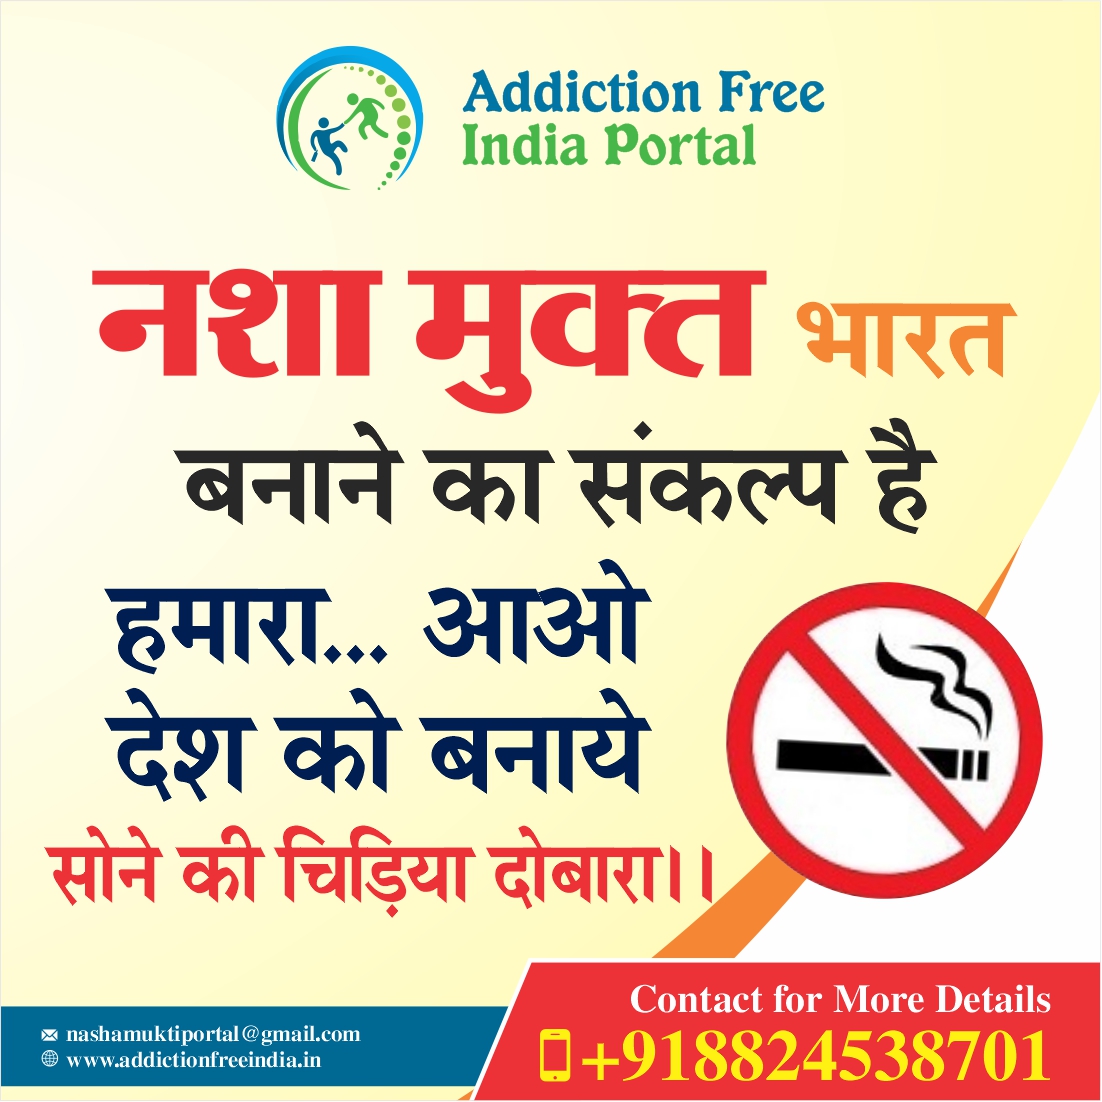 Arpan (care) Drug de Addiction and rehabilitation center in Agra